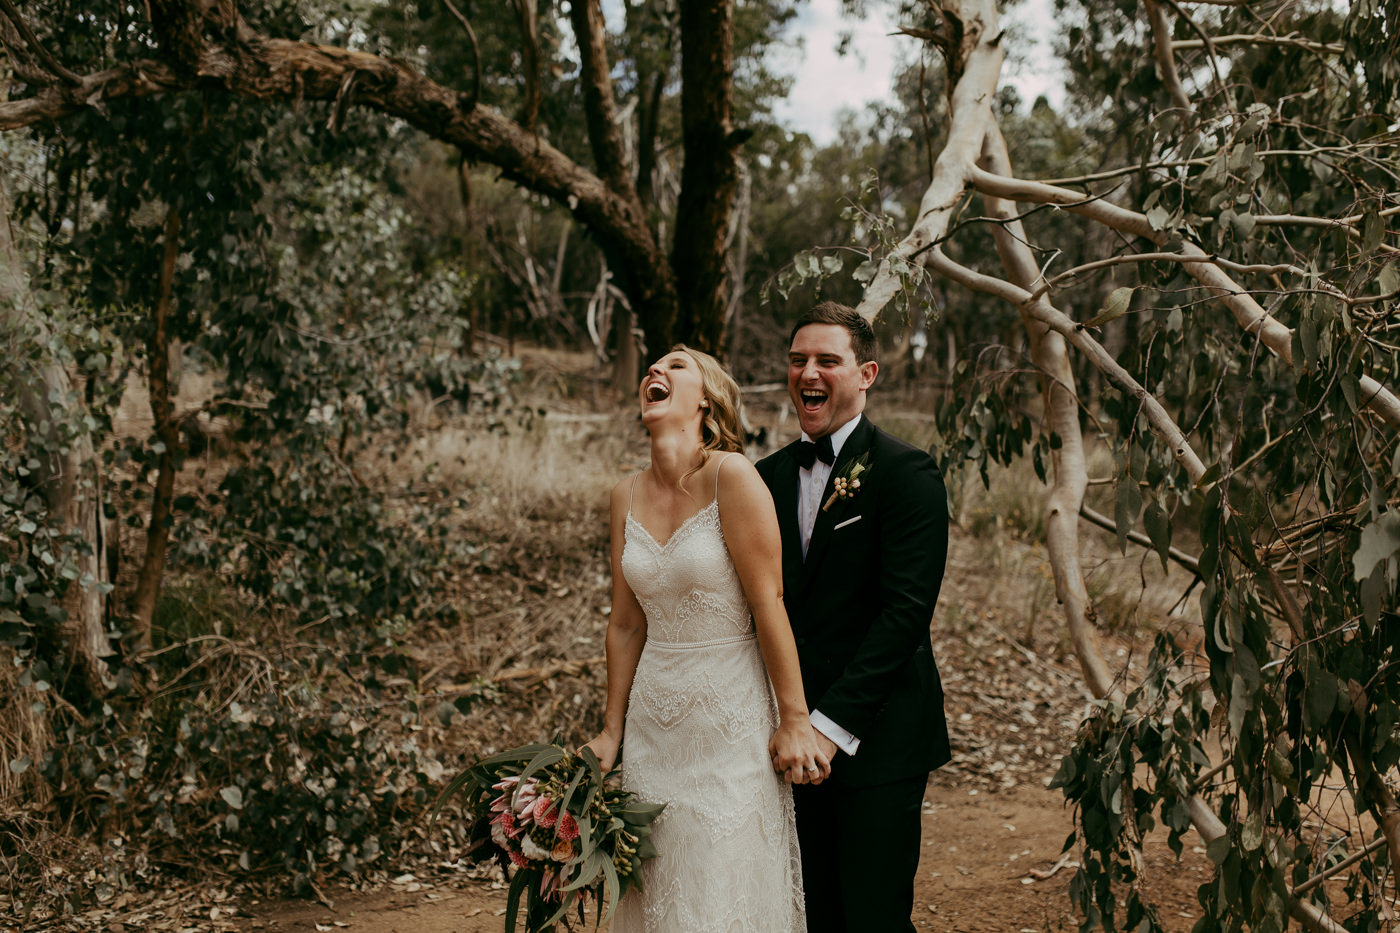 Anthony & Eliet - Wagga Wagga Wedding - Country NSW - Samantha Heather Photography-62.jpg